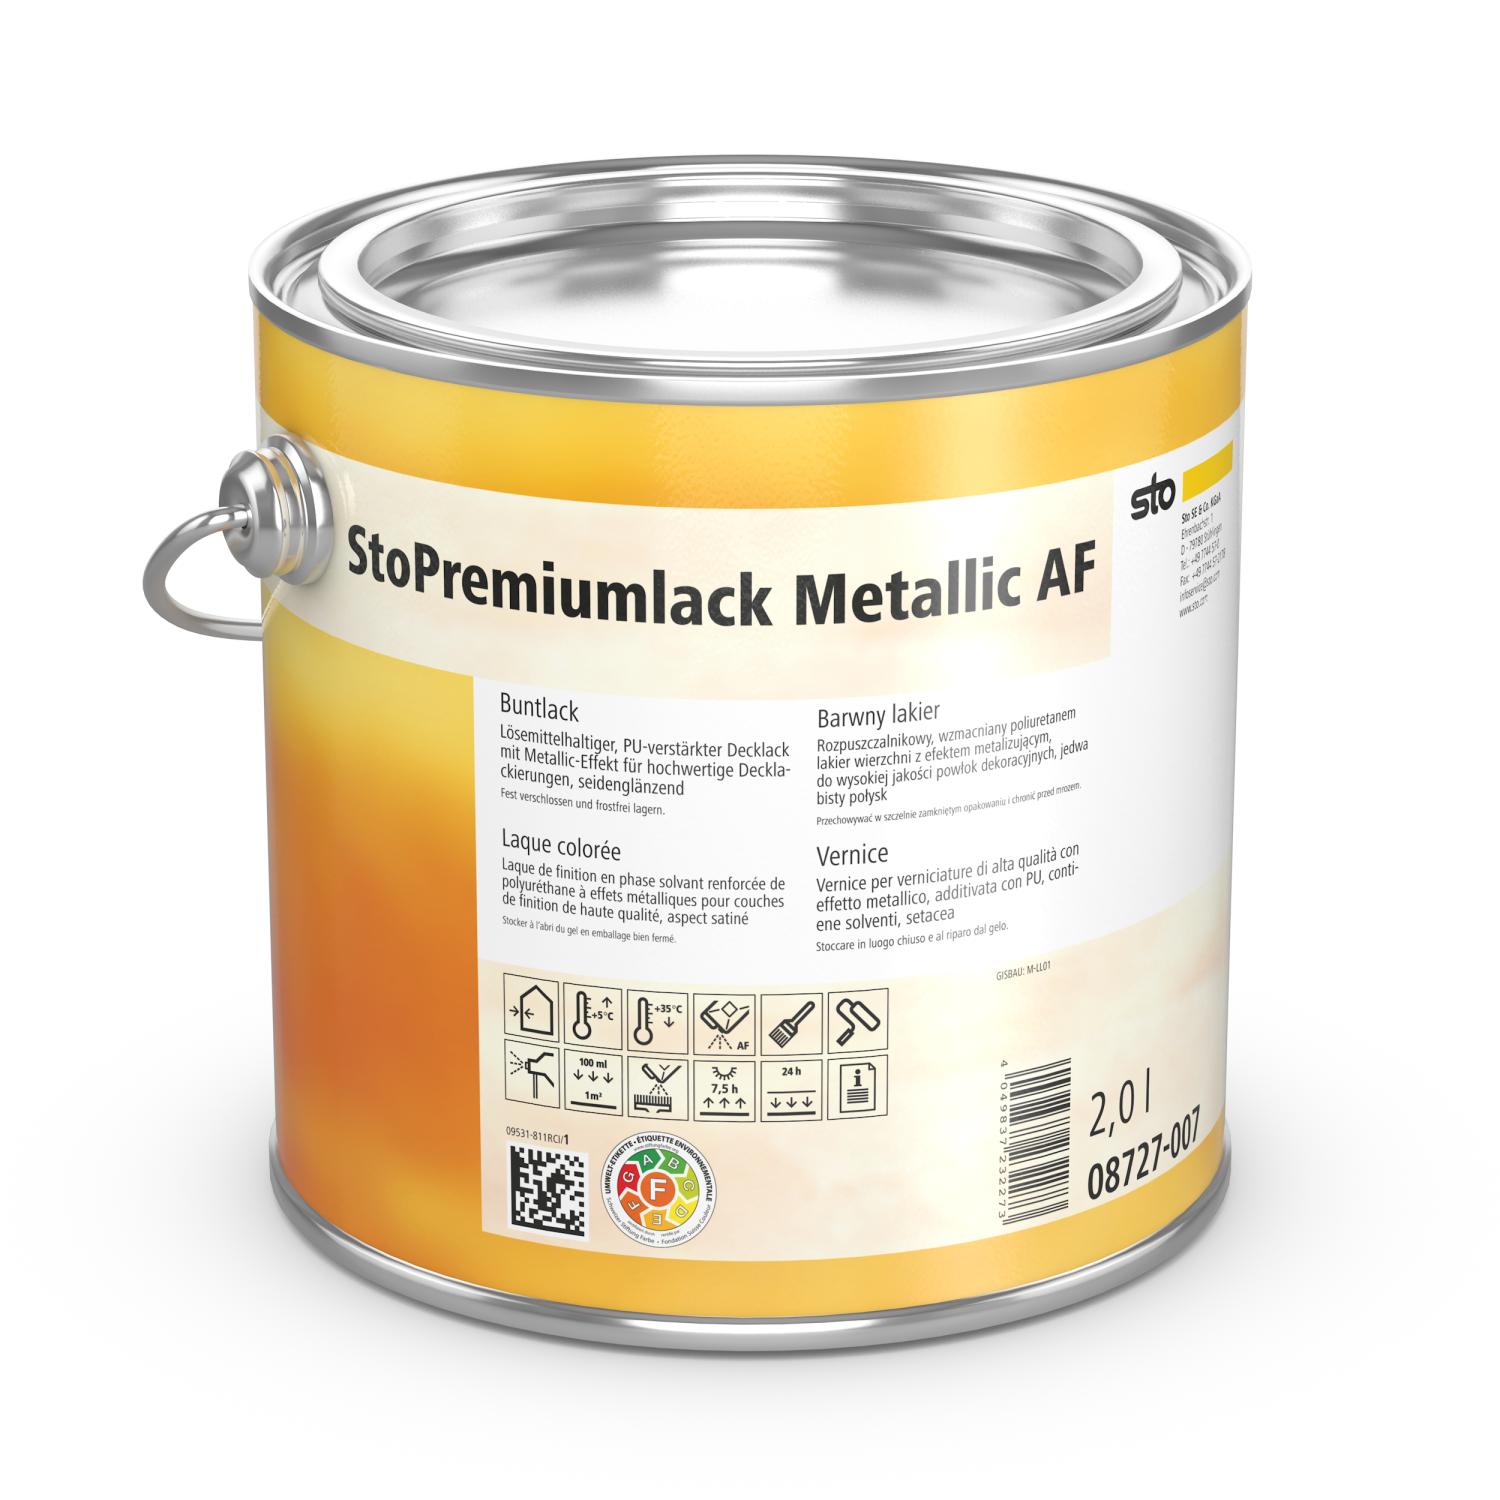 StoPremiumlack Metallic AF getönt - 0,75 l Dose